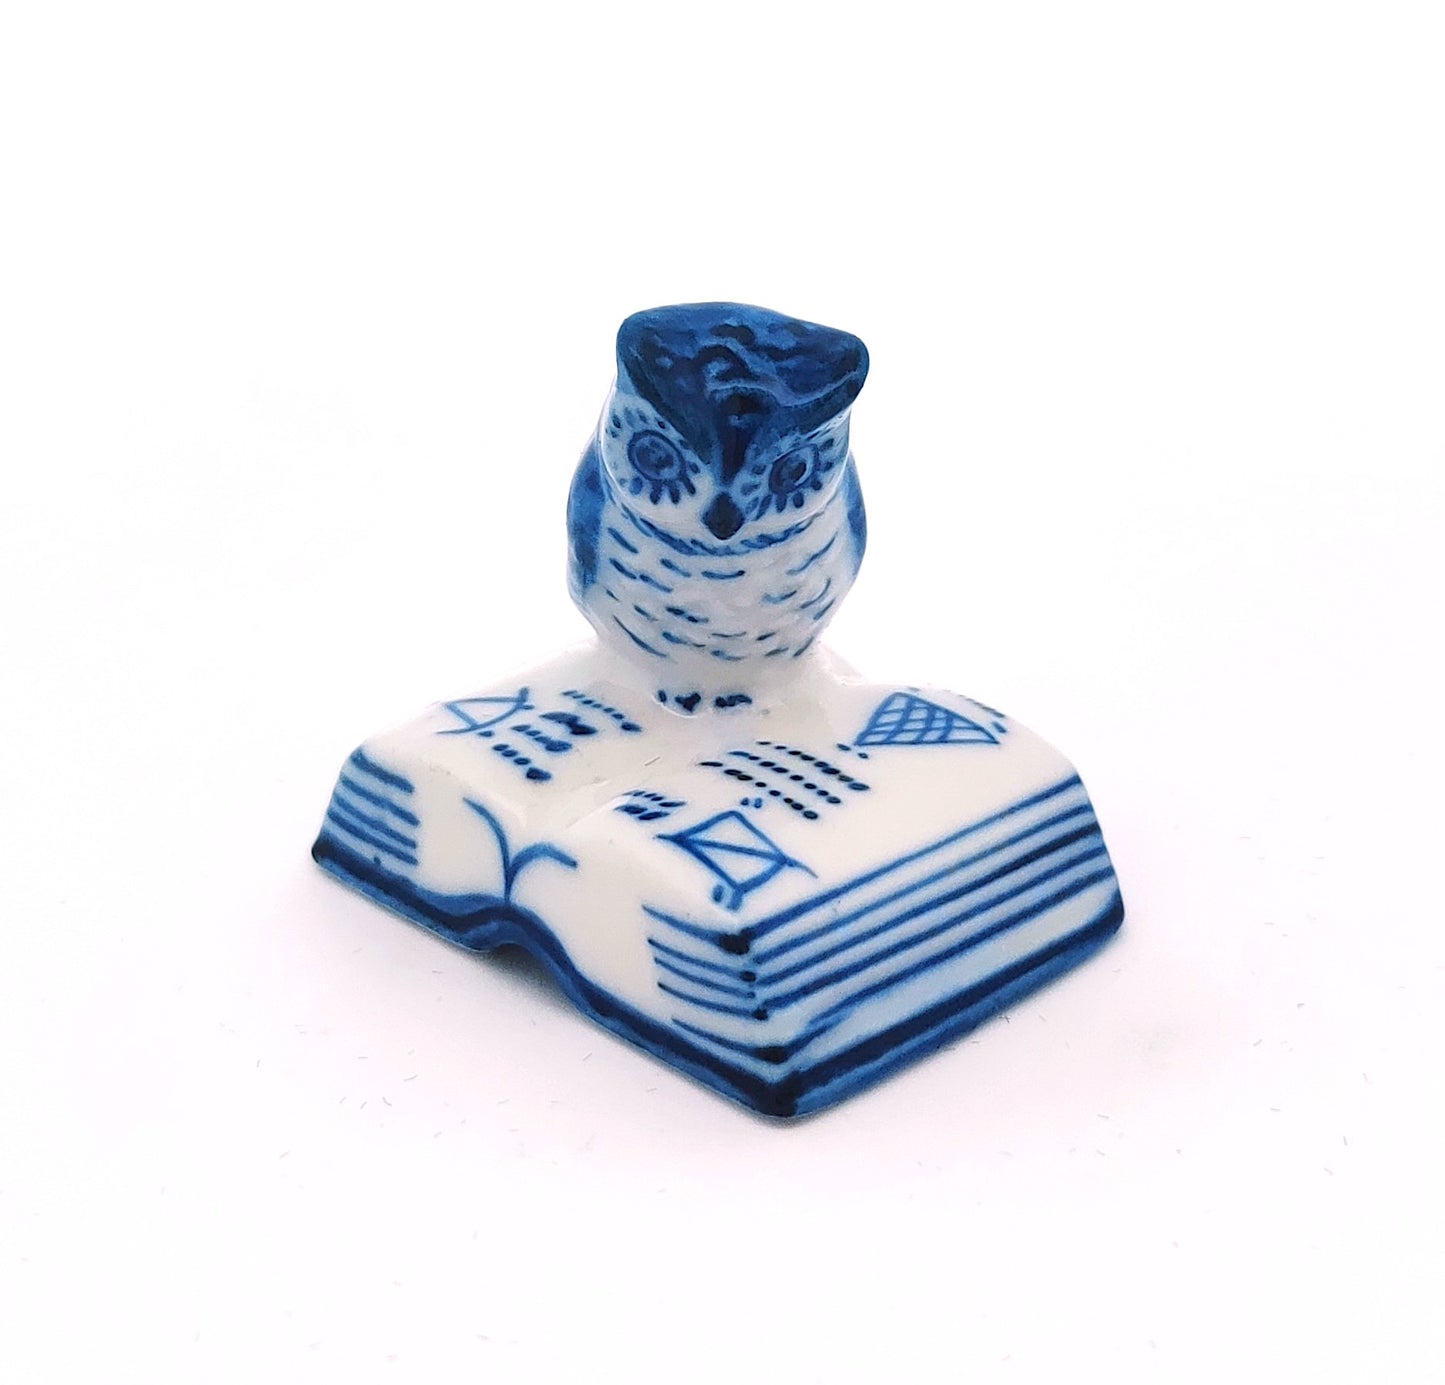 Blue Owl Bird On the Book Figurine Ceramic Tiny Handicraft Miniature Dollhouse